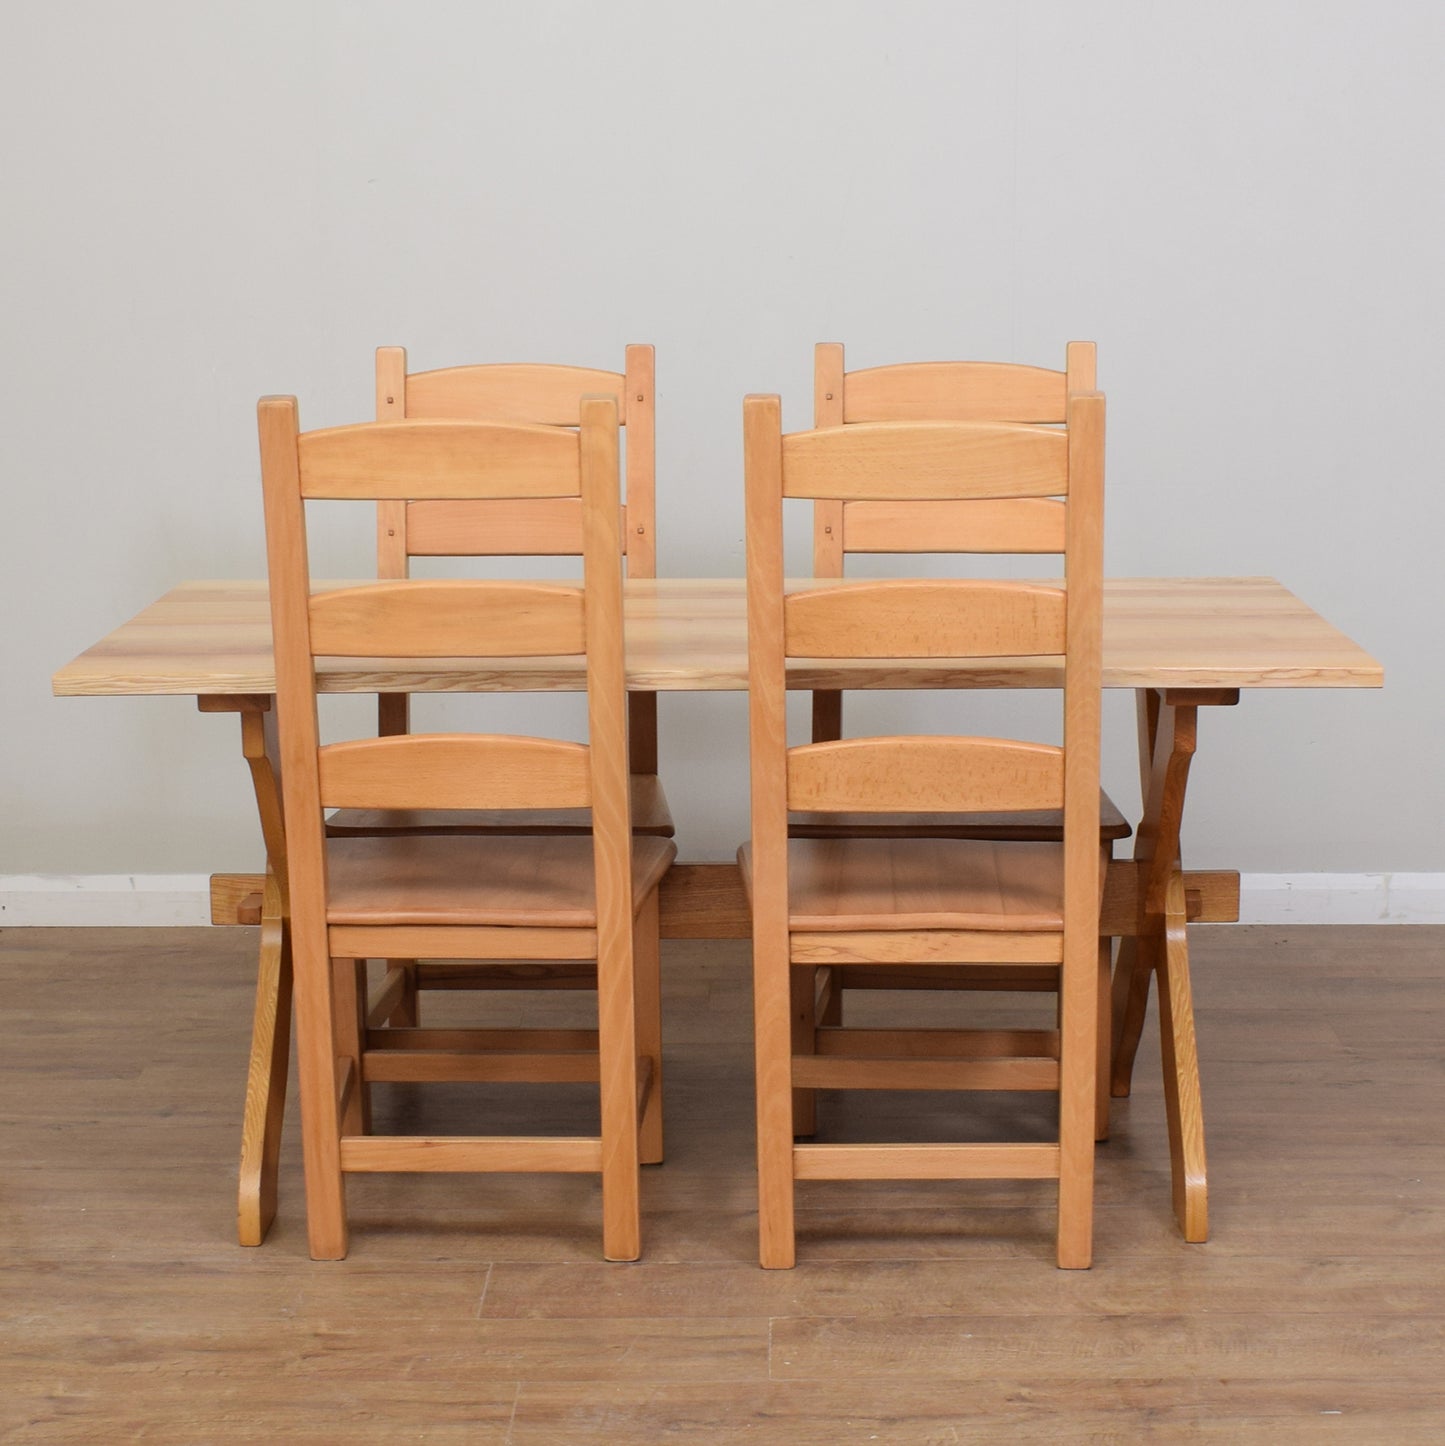 Farmhouse Style Table & Four Chairs